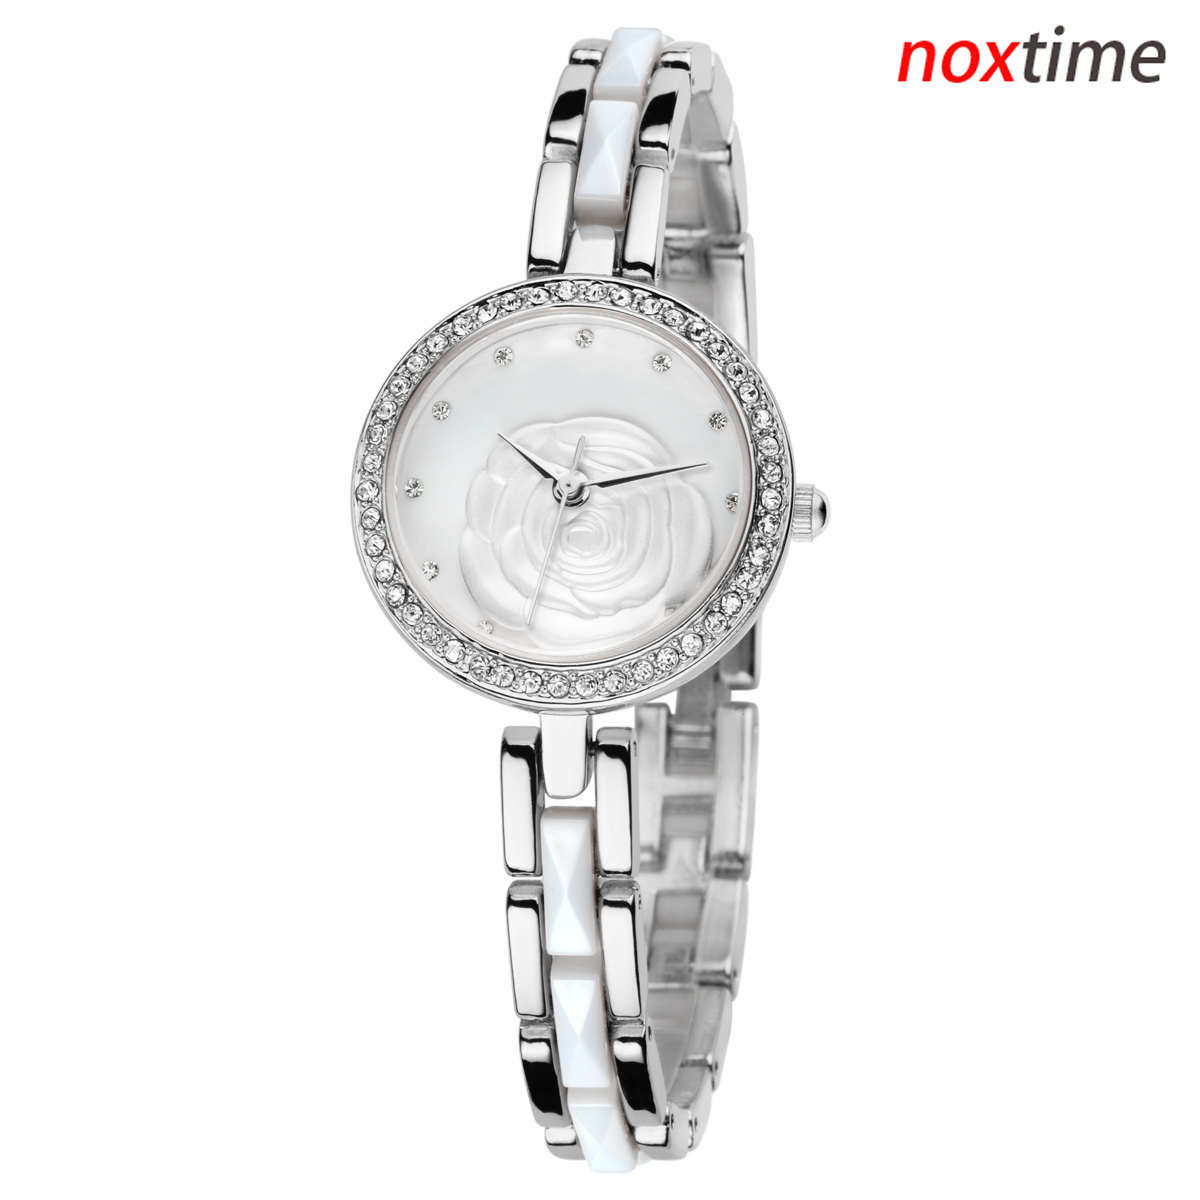 #2500 Wrist Watches Women Fashion Luxury Watch Women Dress Watch - Silver watch